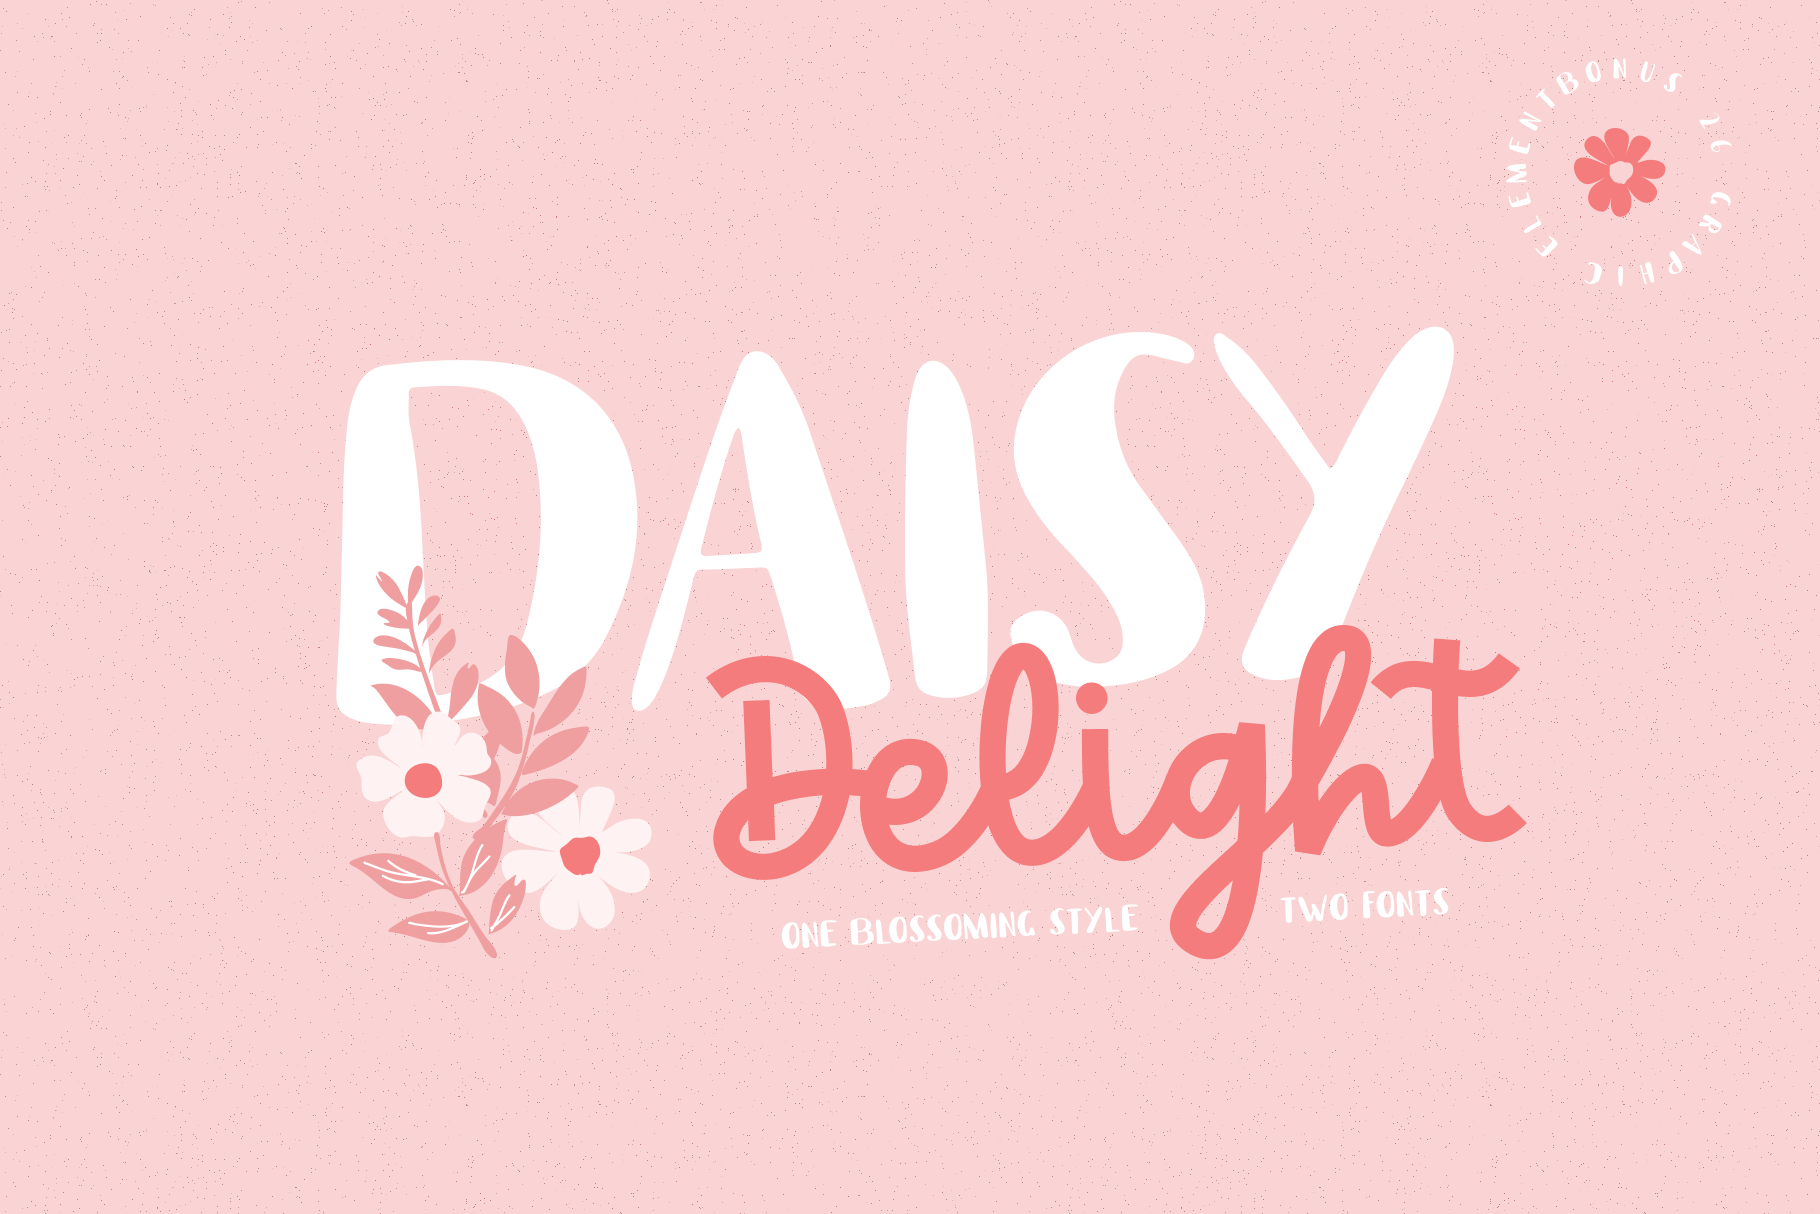 HT Daisy Delight